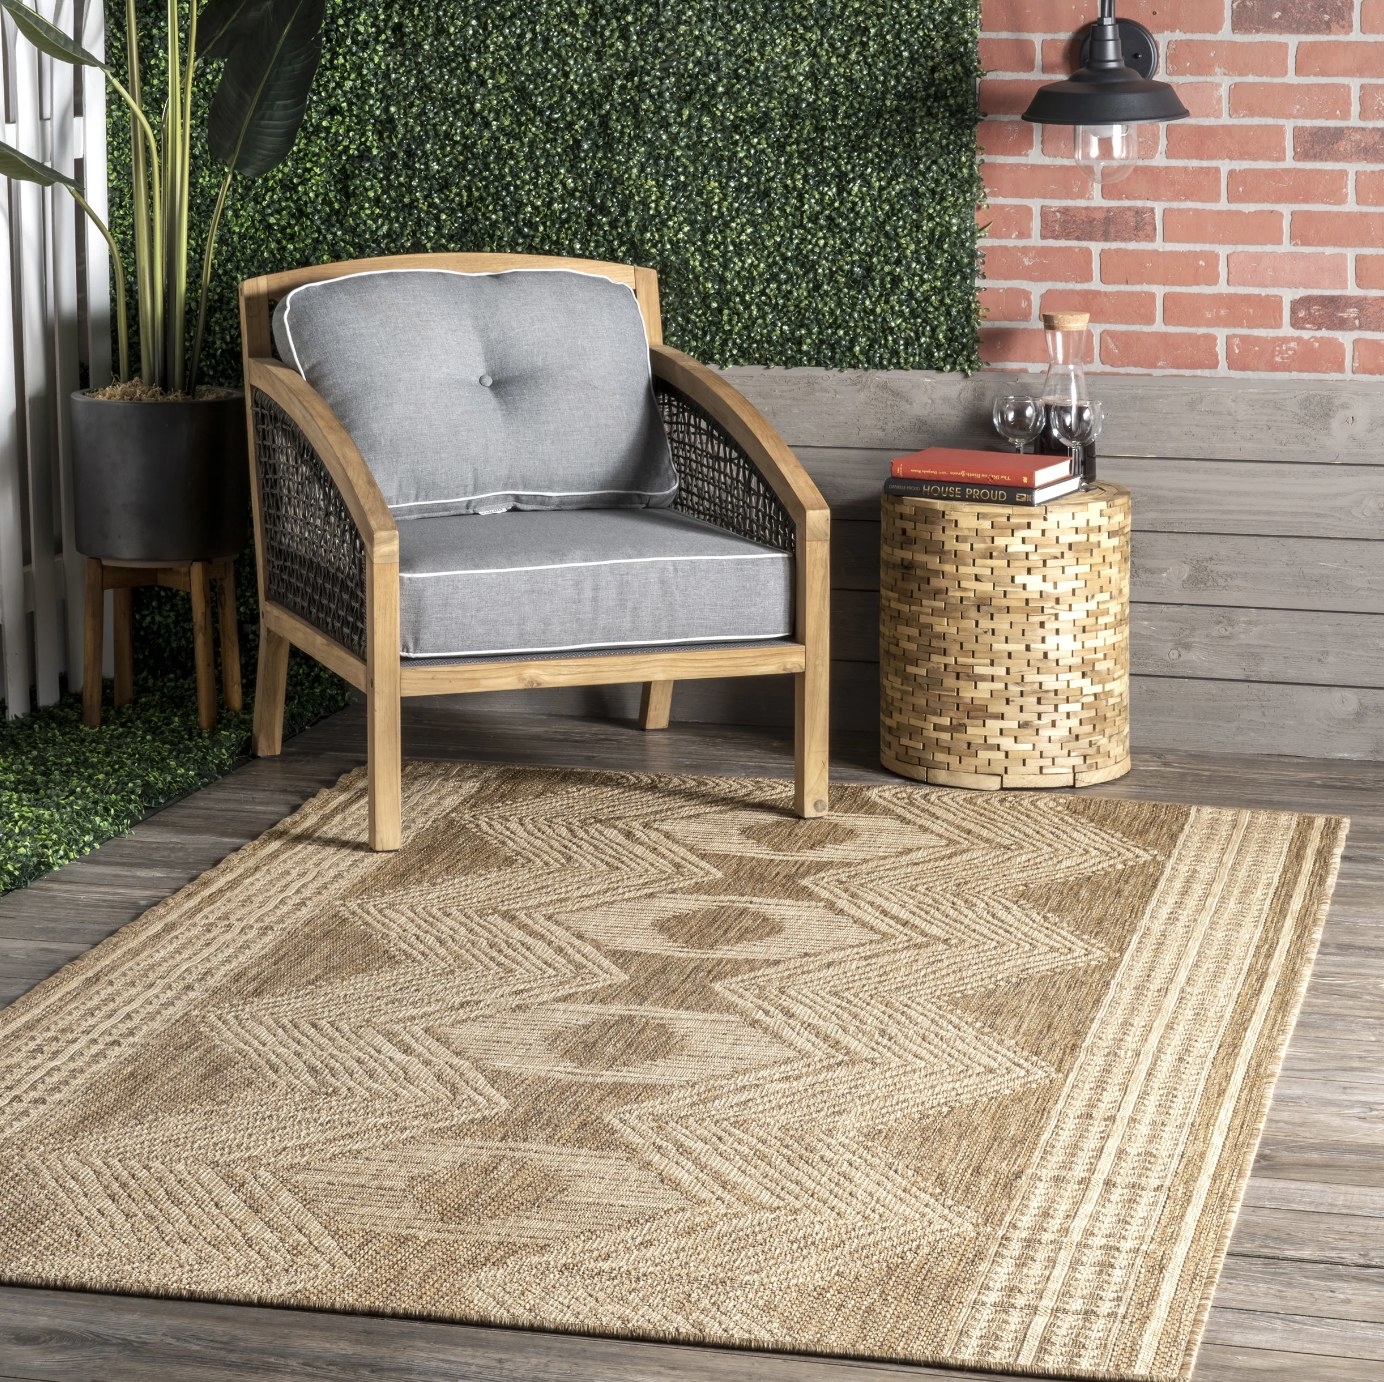 A tan geometric indoor outdoor area rug